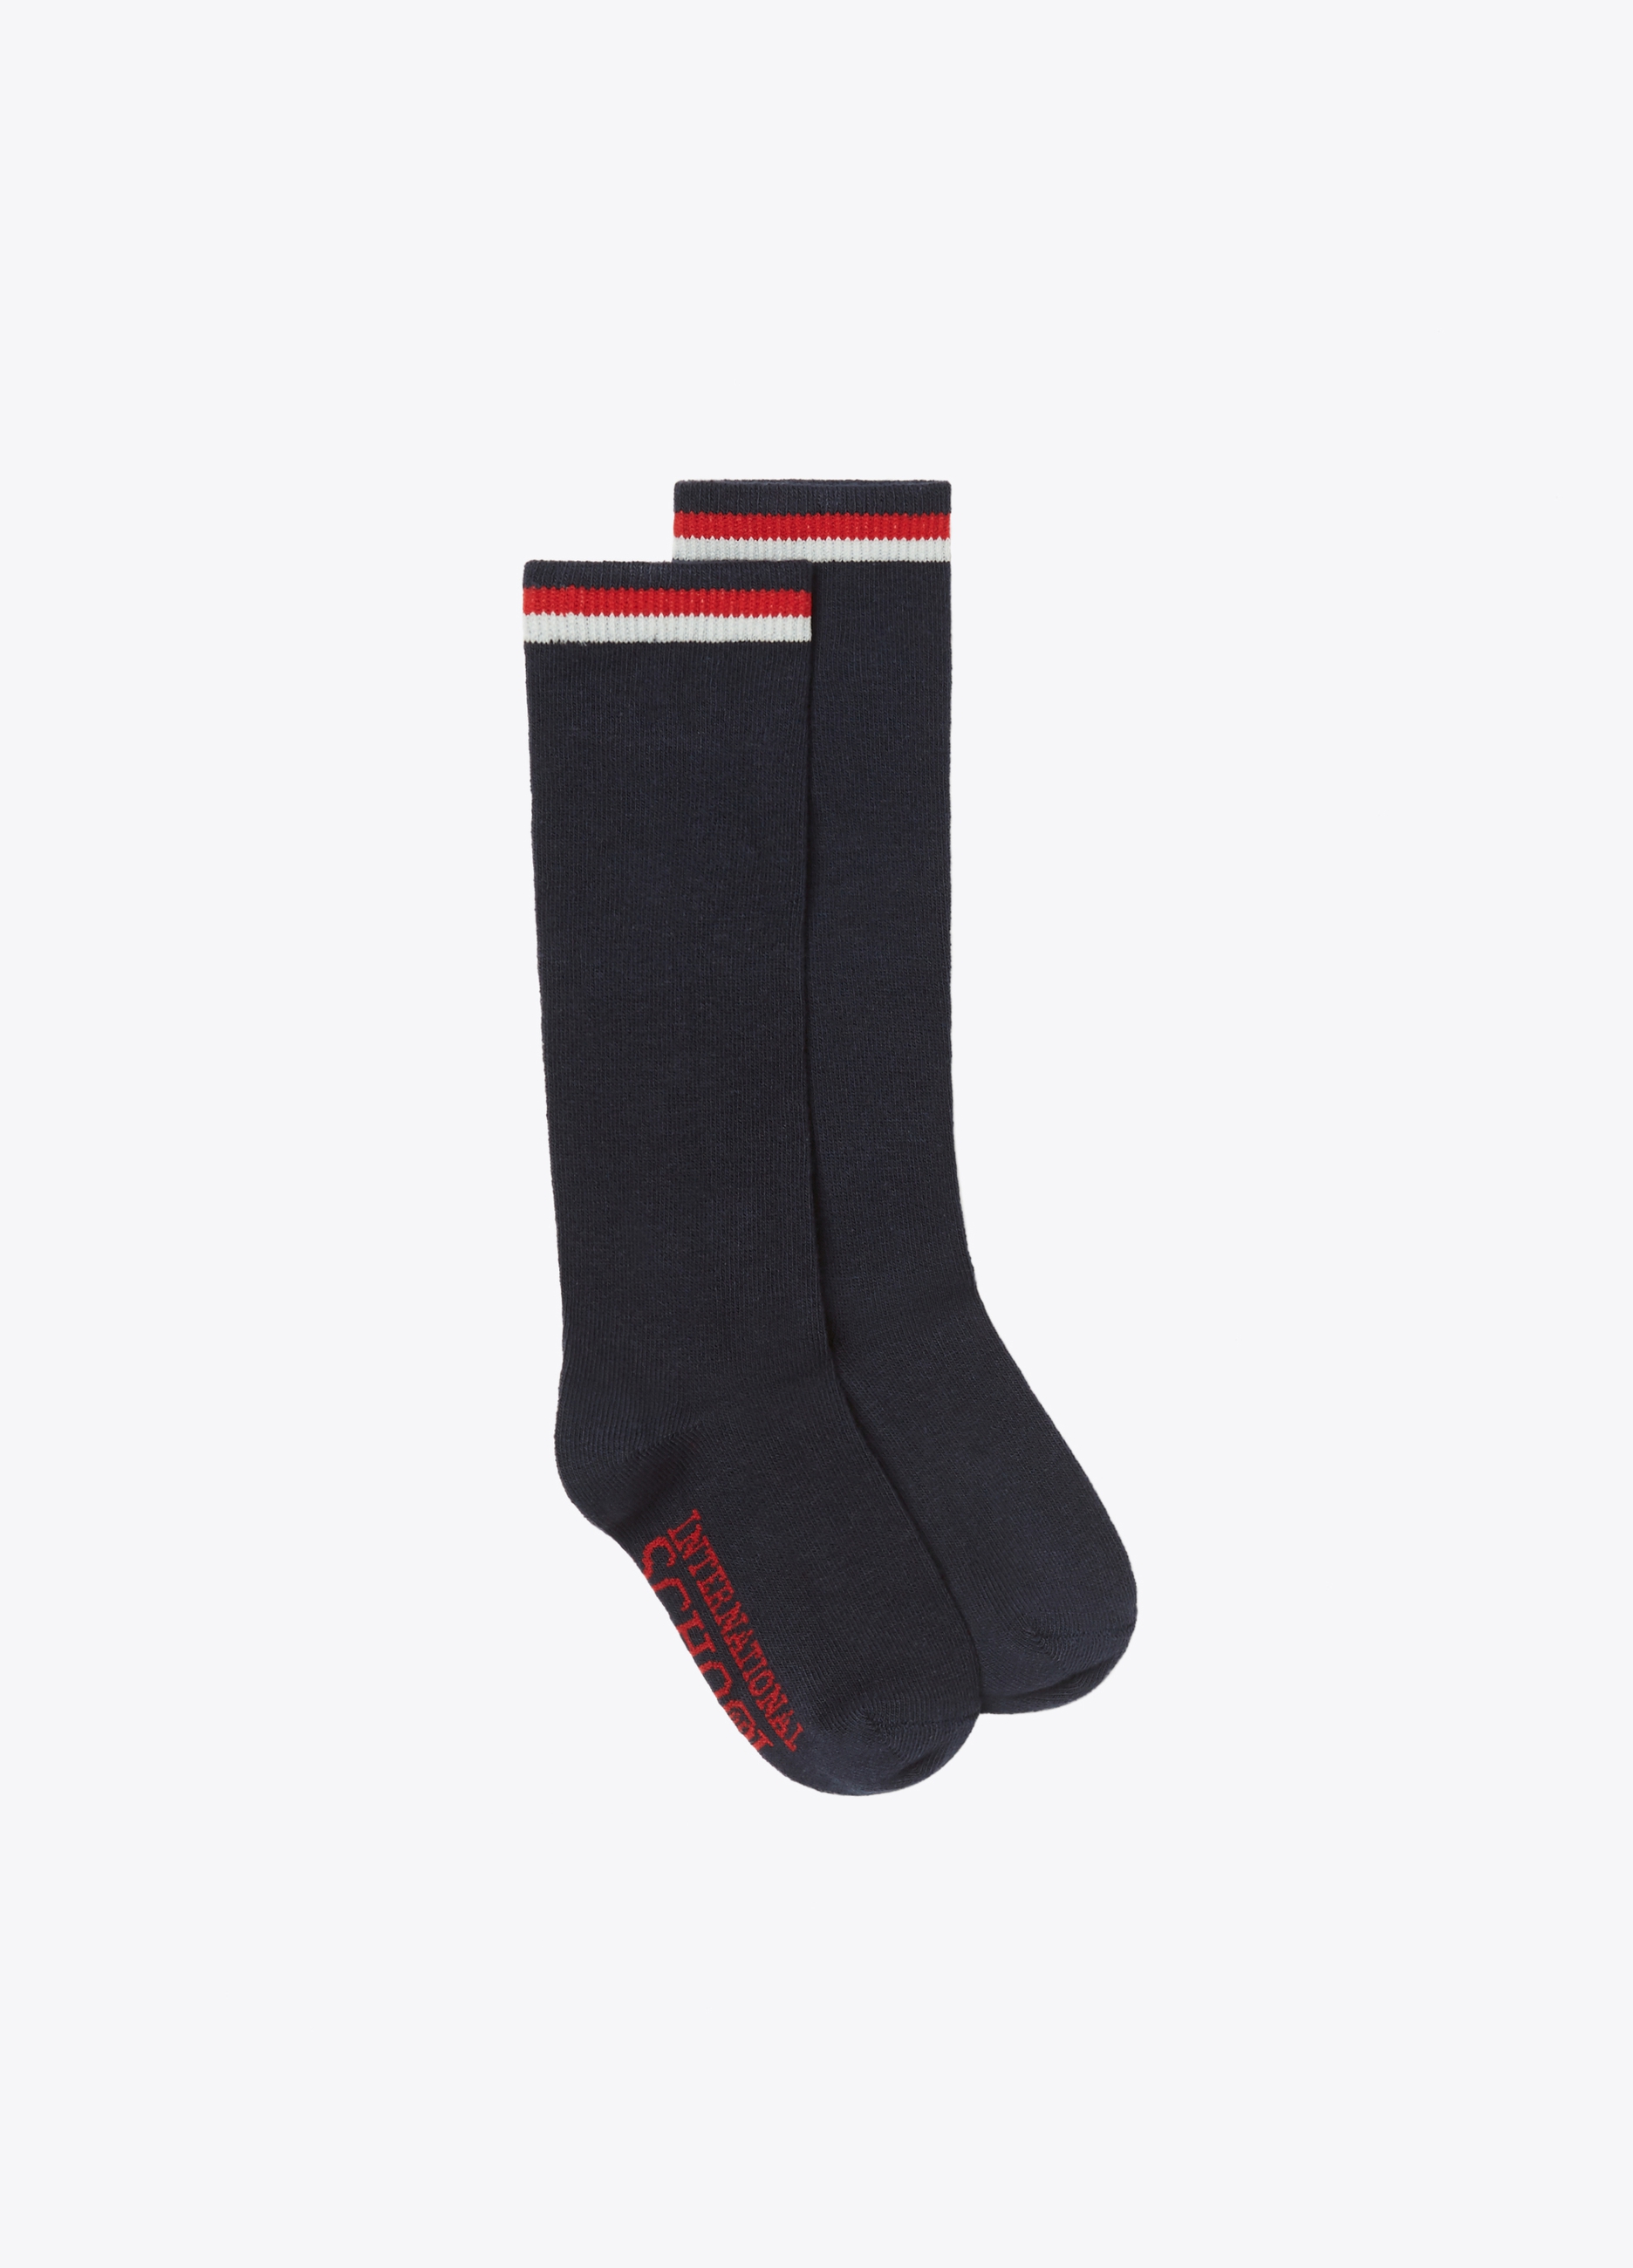 BOY - Long stretch socks with ribbing, 1 pair.